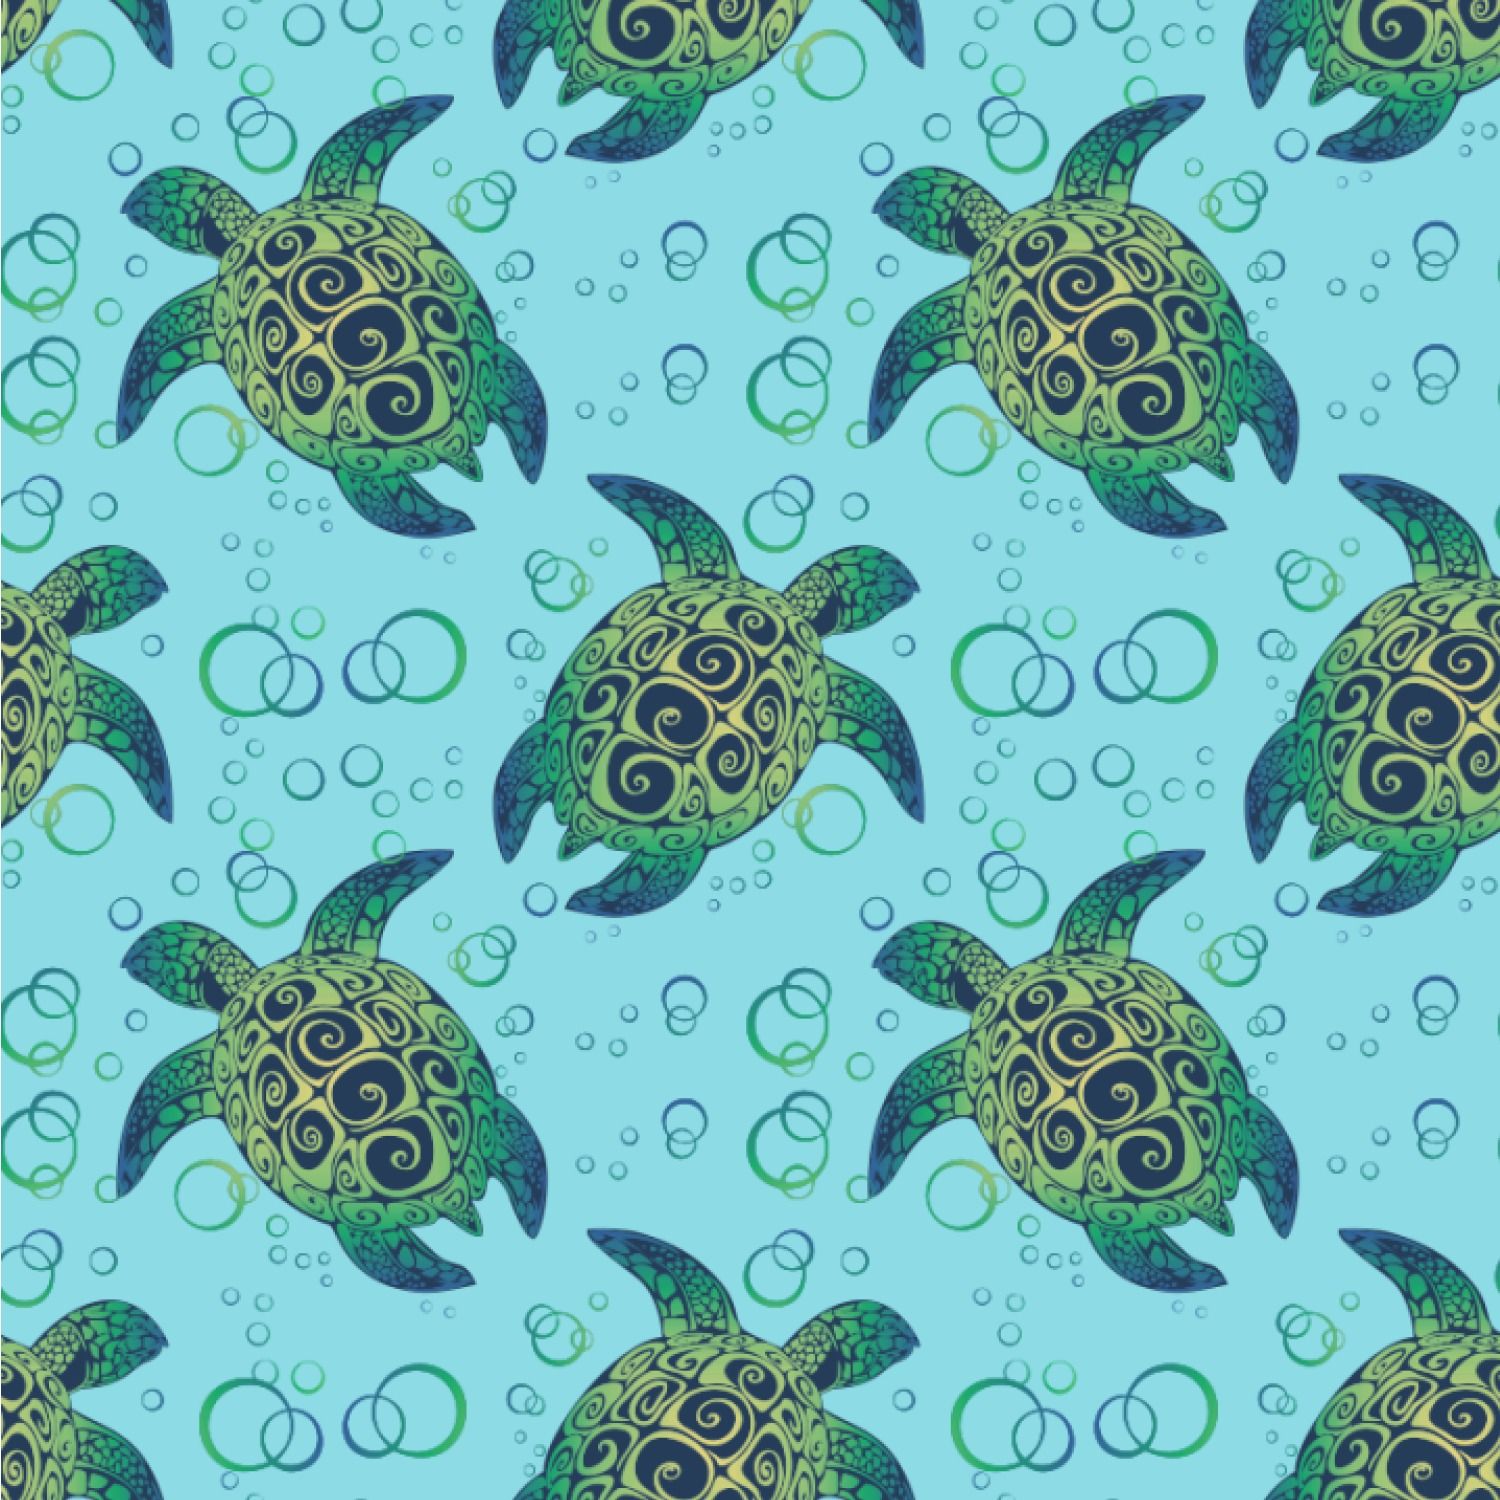 Wallpaper Of Turtles